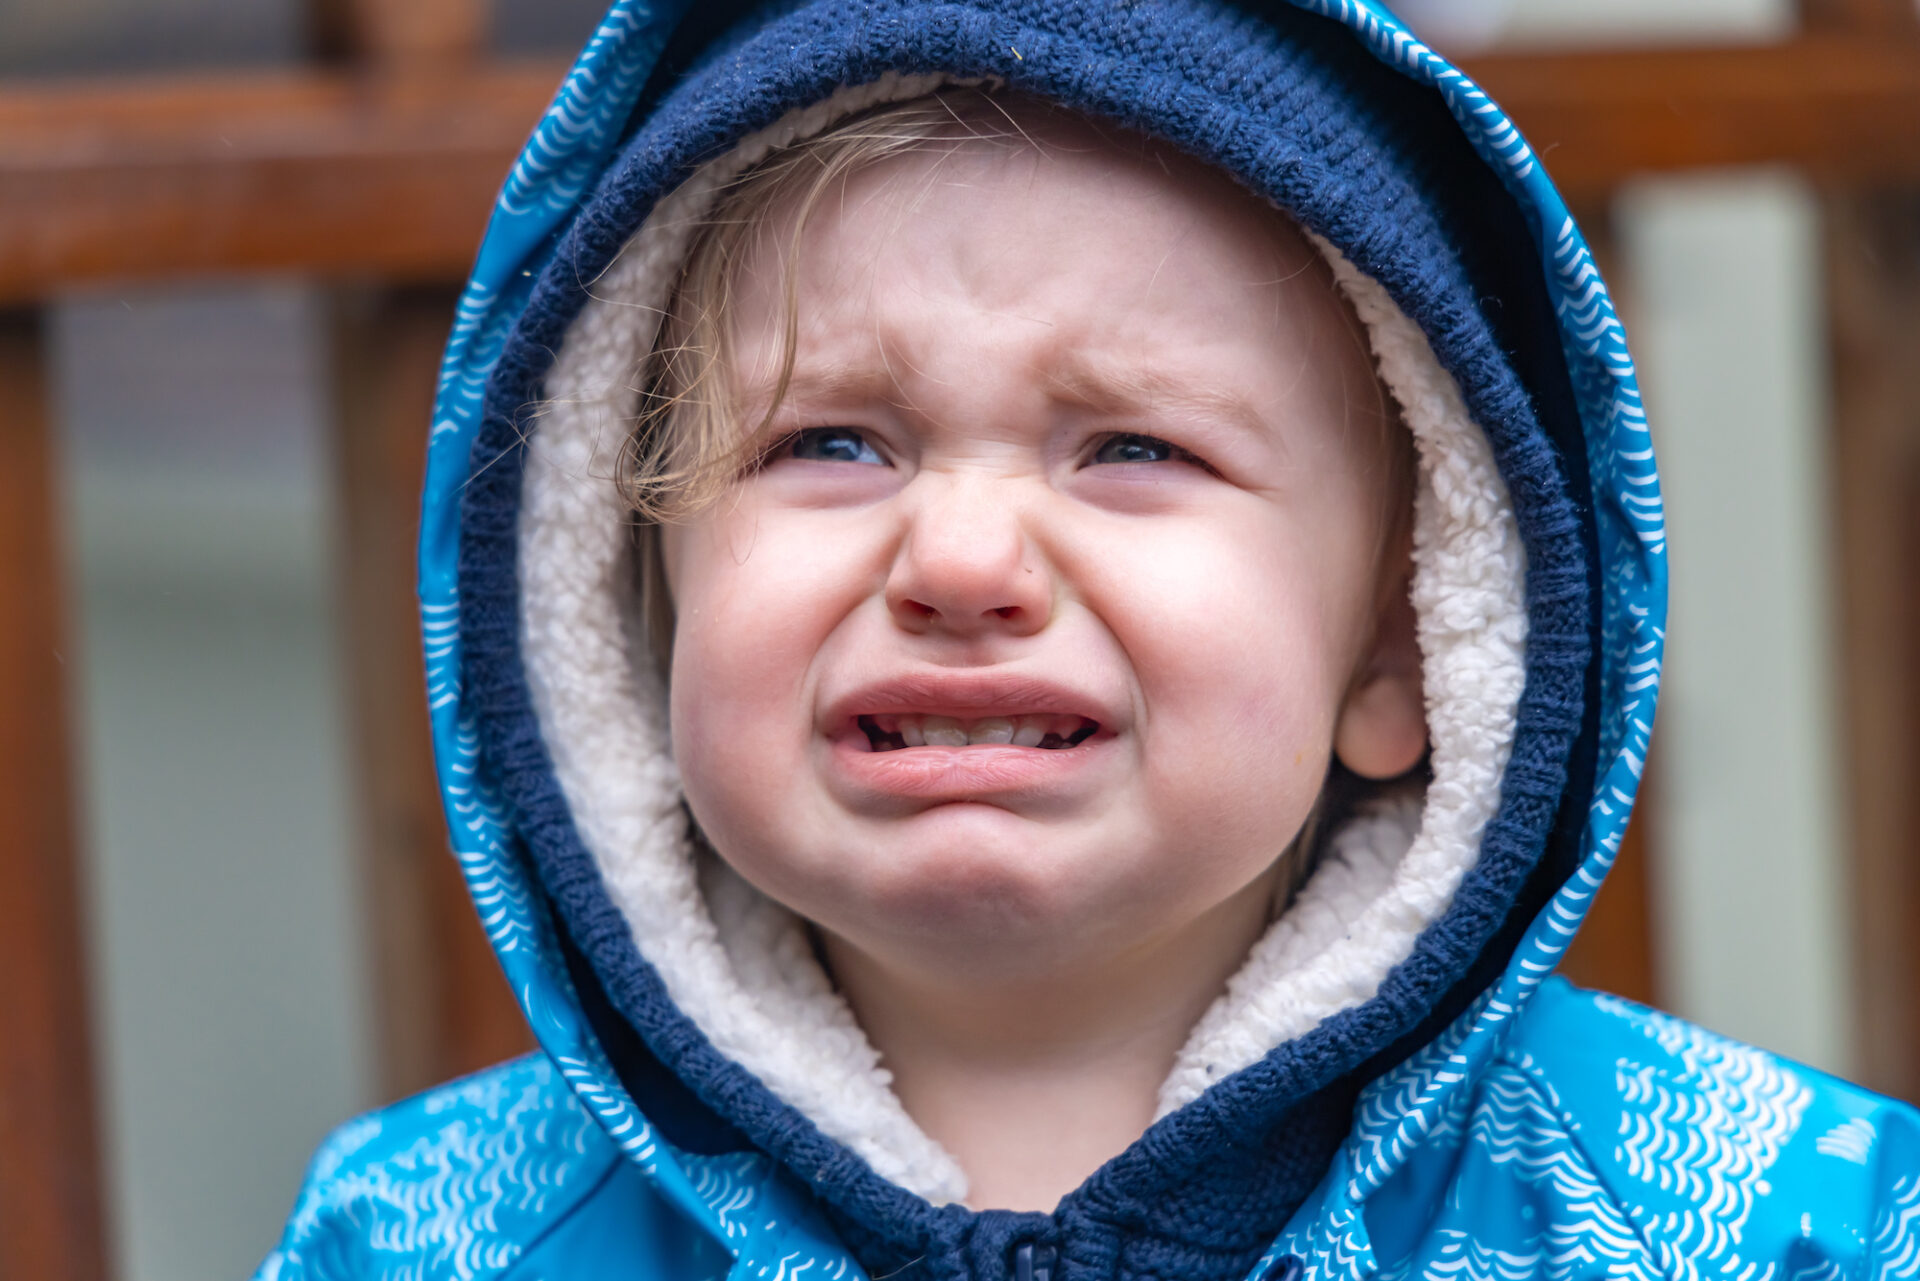 Little boy unhappy wearing blue hood outdoors.